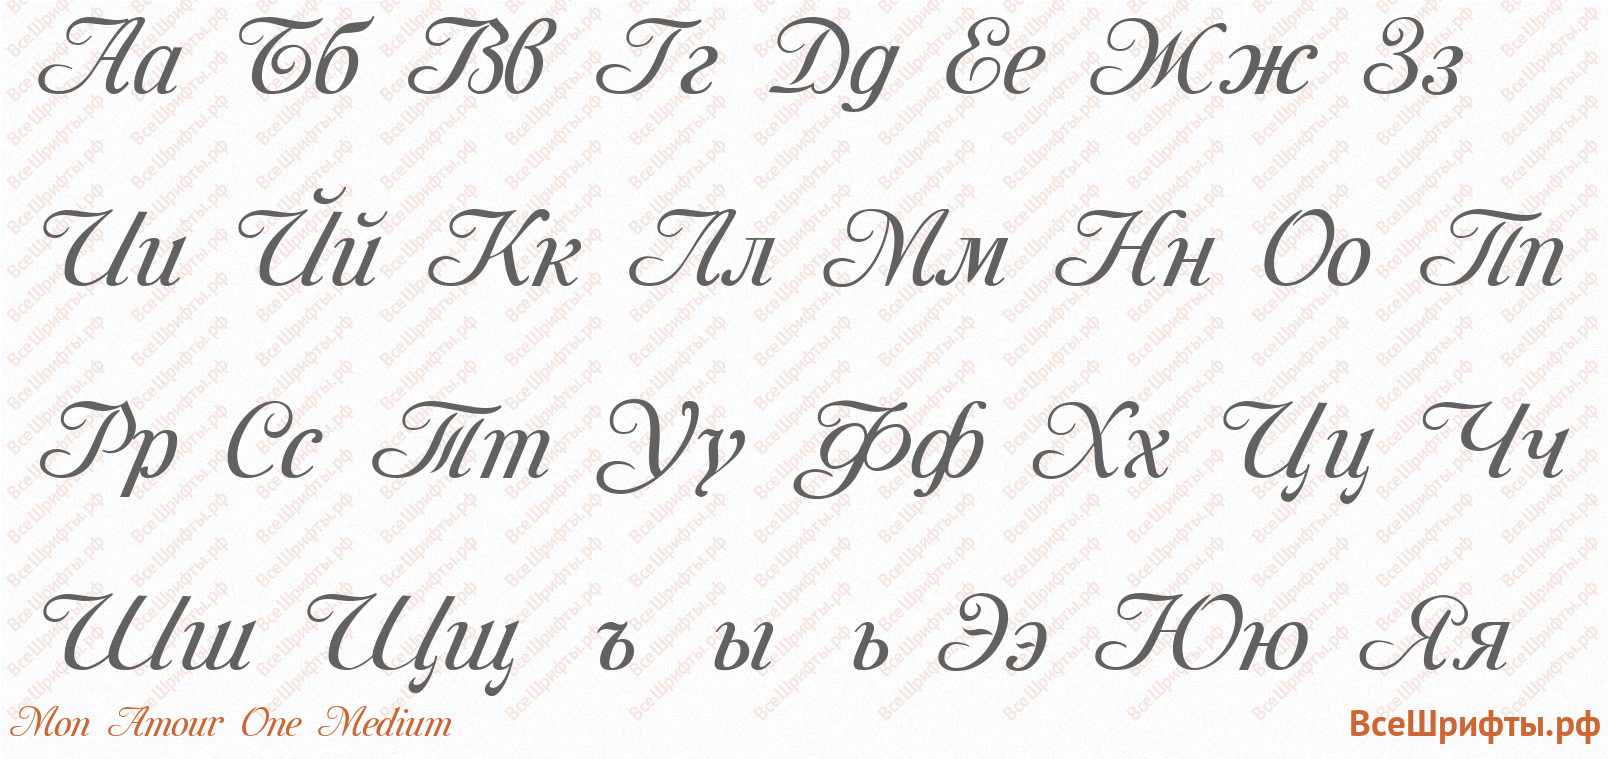 Шрифт Mon Amour One Medium с русскими буквами